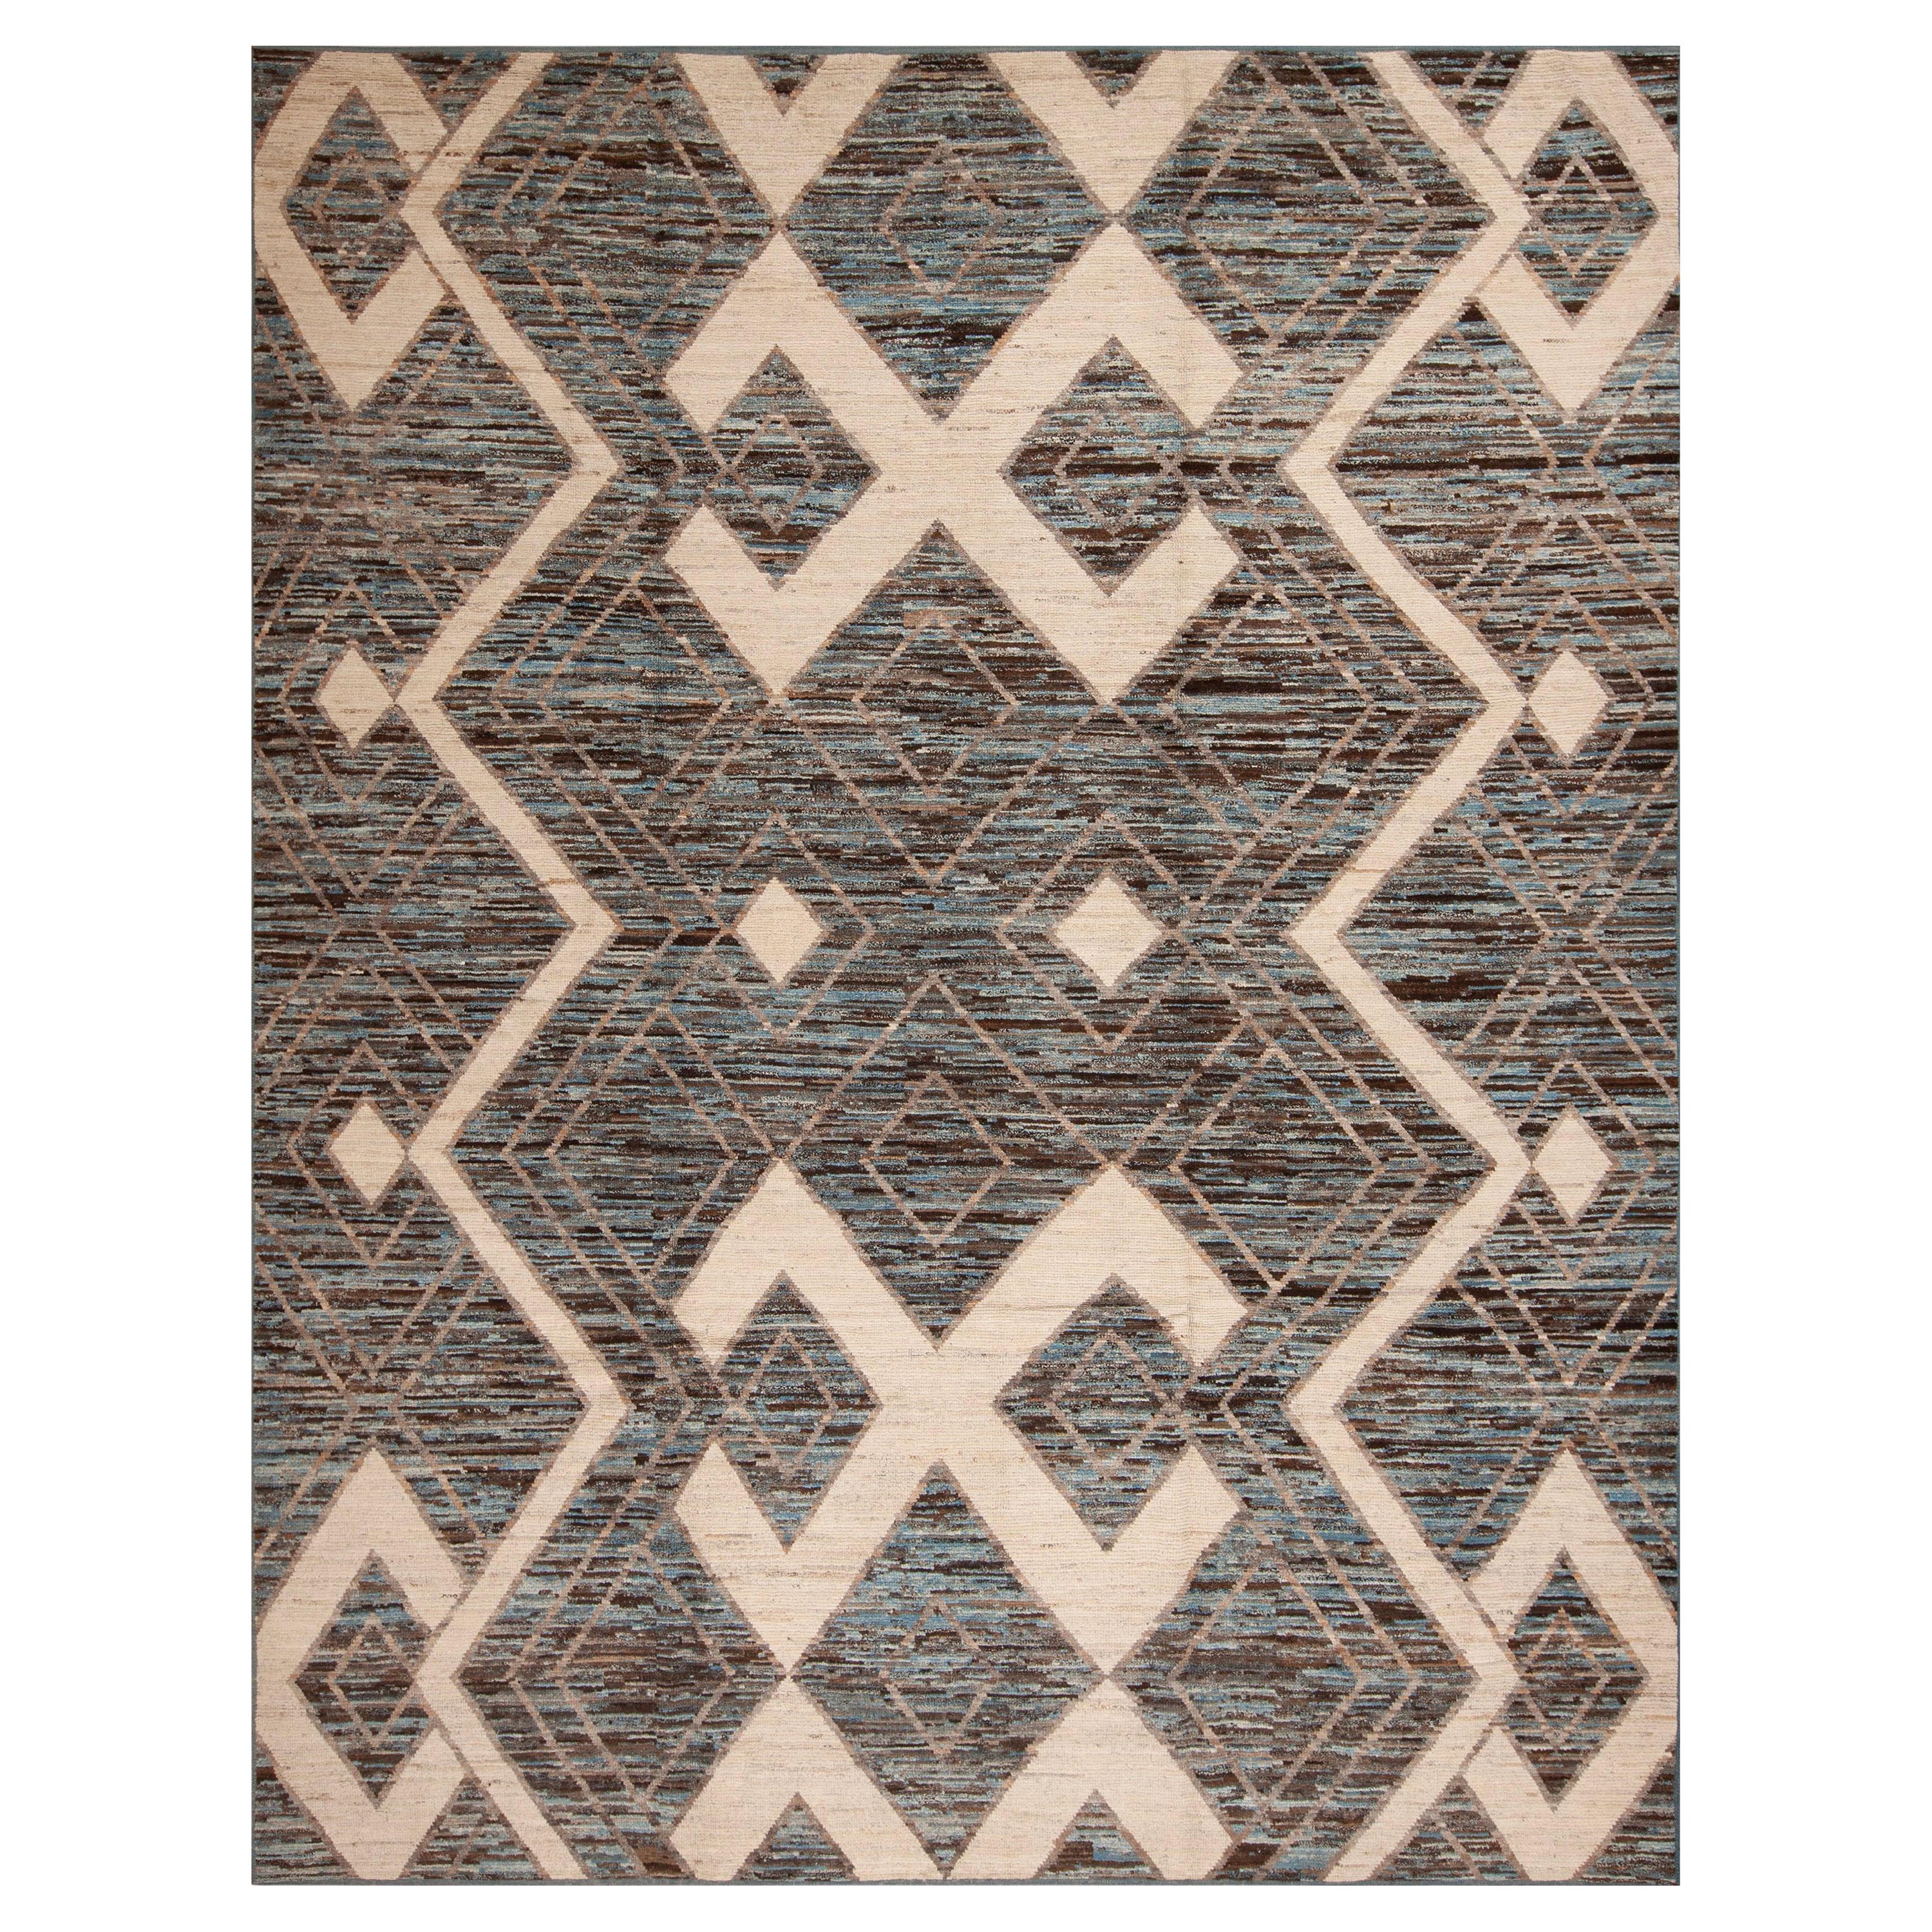 Collection Nazmiyal - Tapis géométrique tribal à fond terreux moderne 9'3" x 11'10" en vente